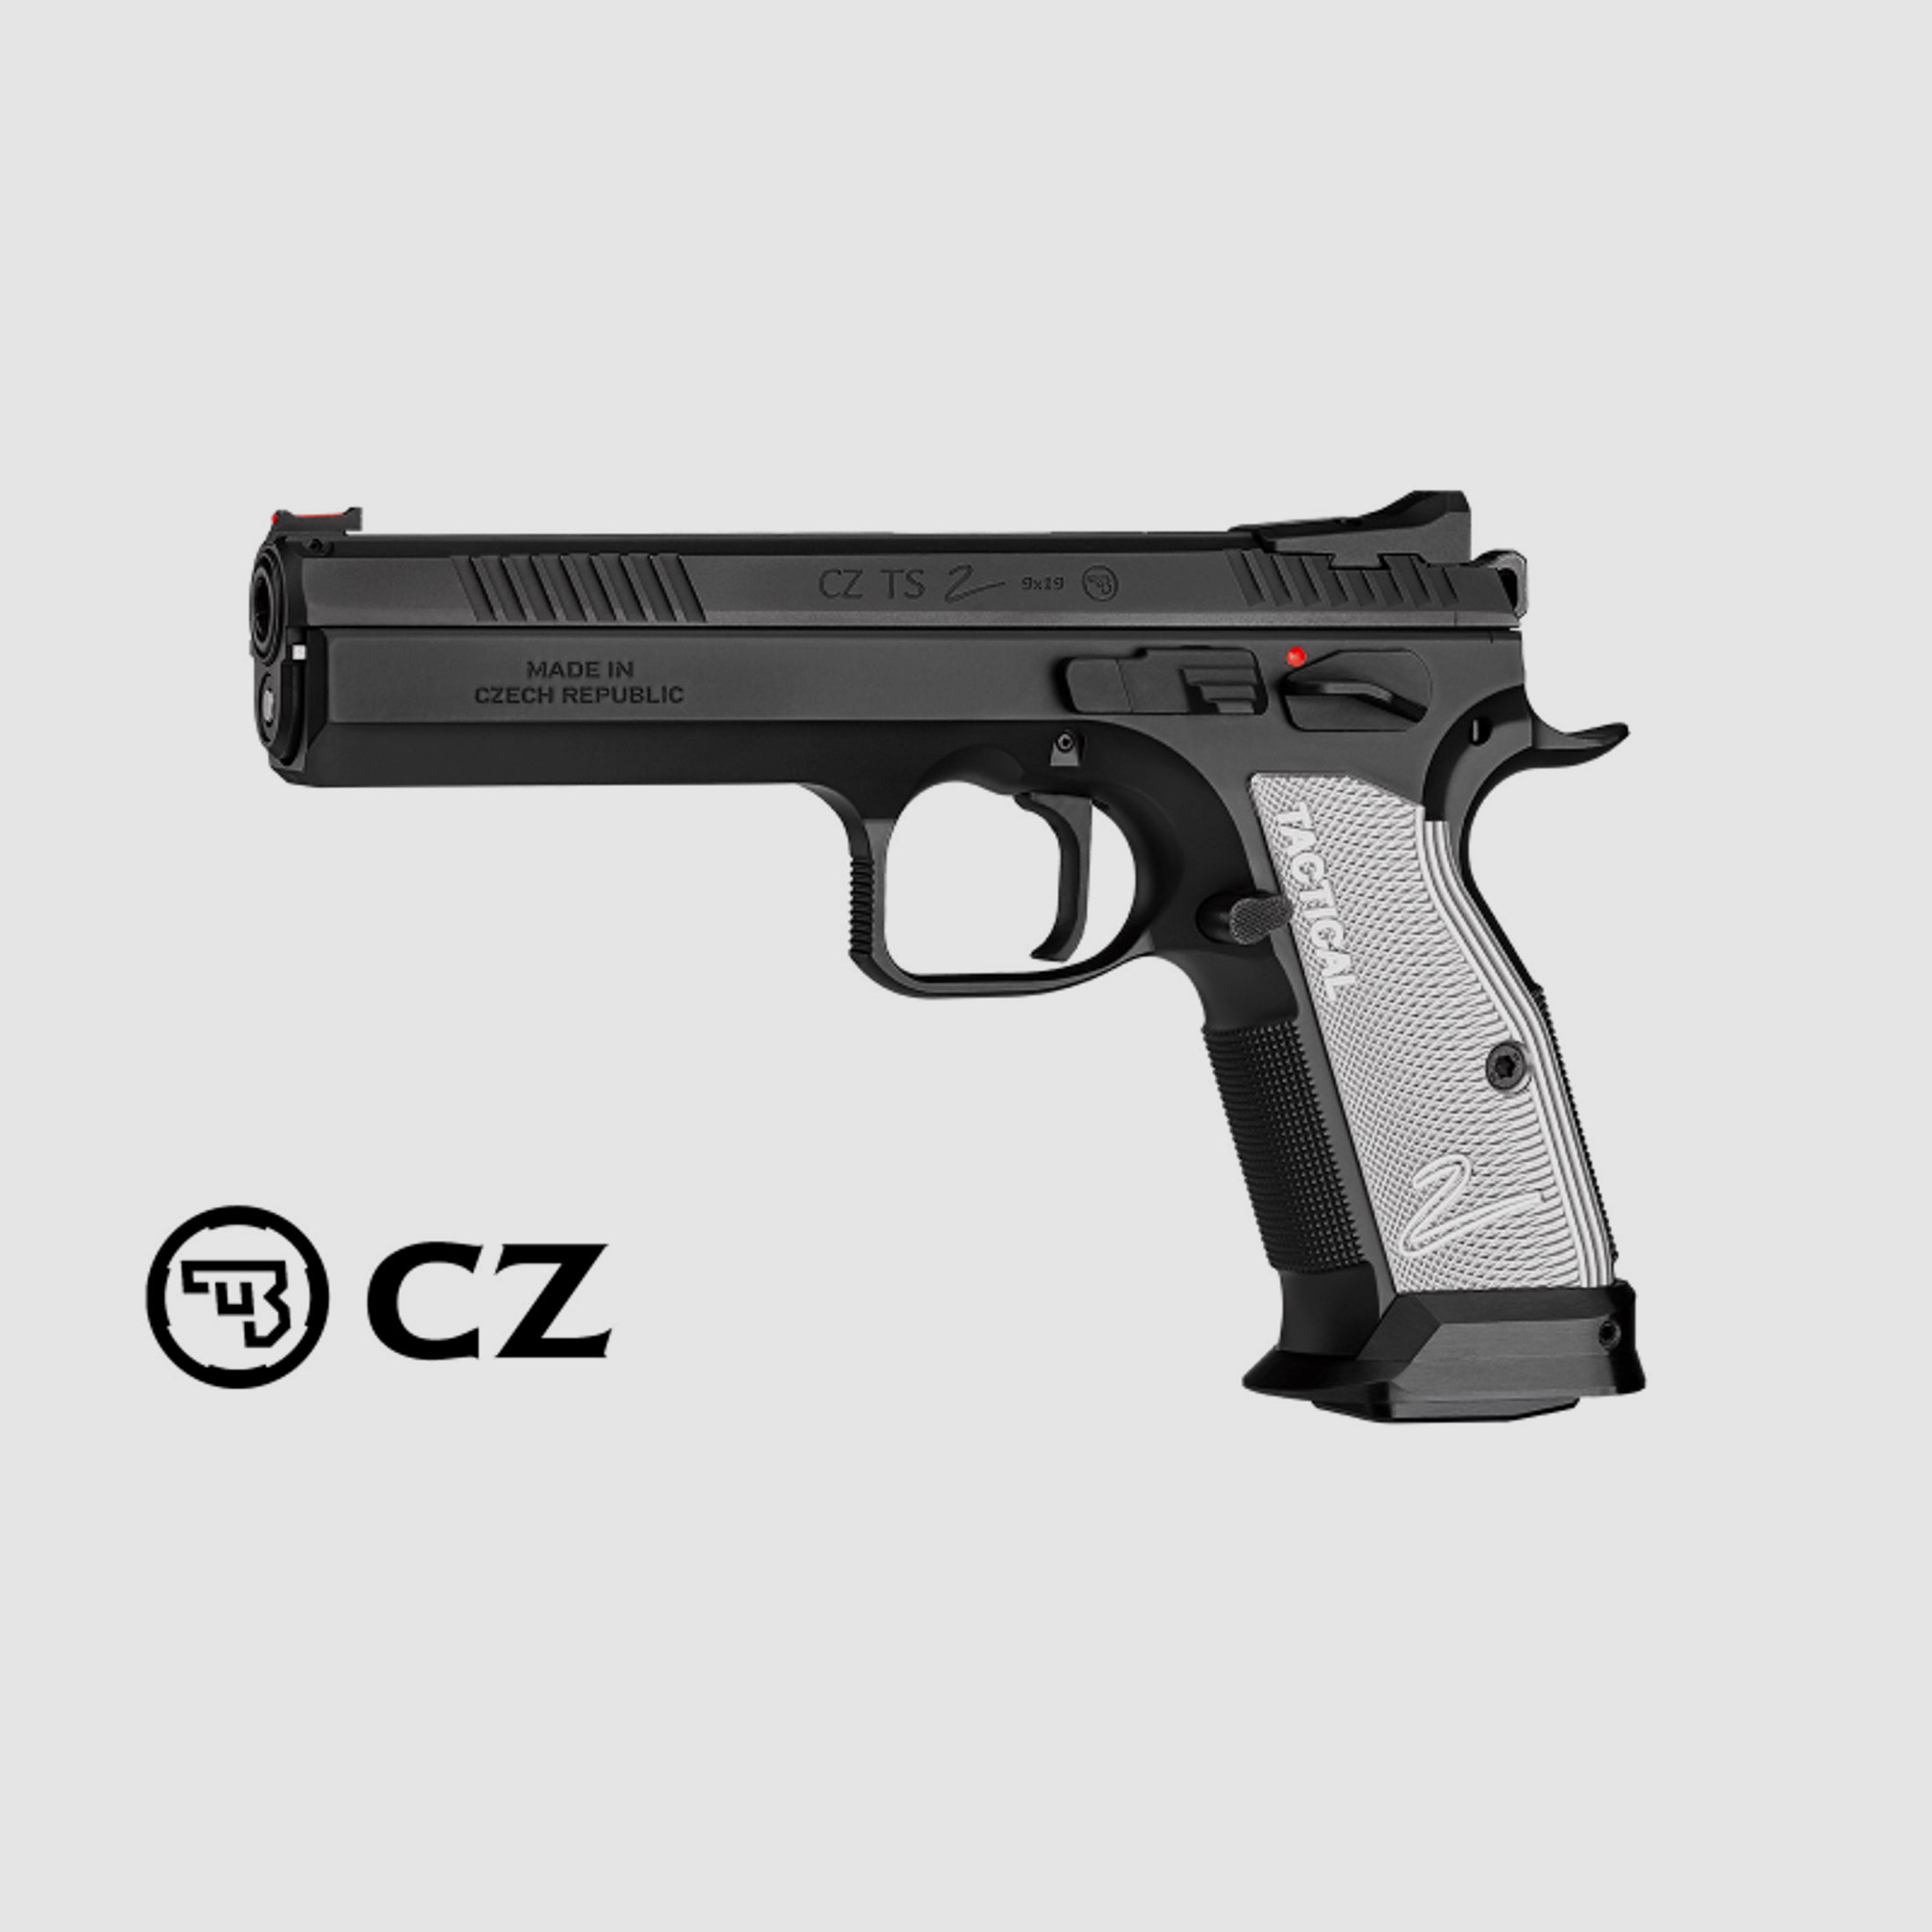 CZ Pistole TS 2 Sports Silber 9mm Luger - perfekt für IPSC